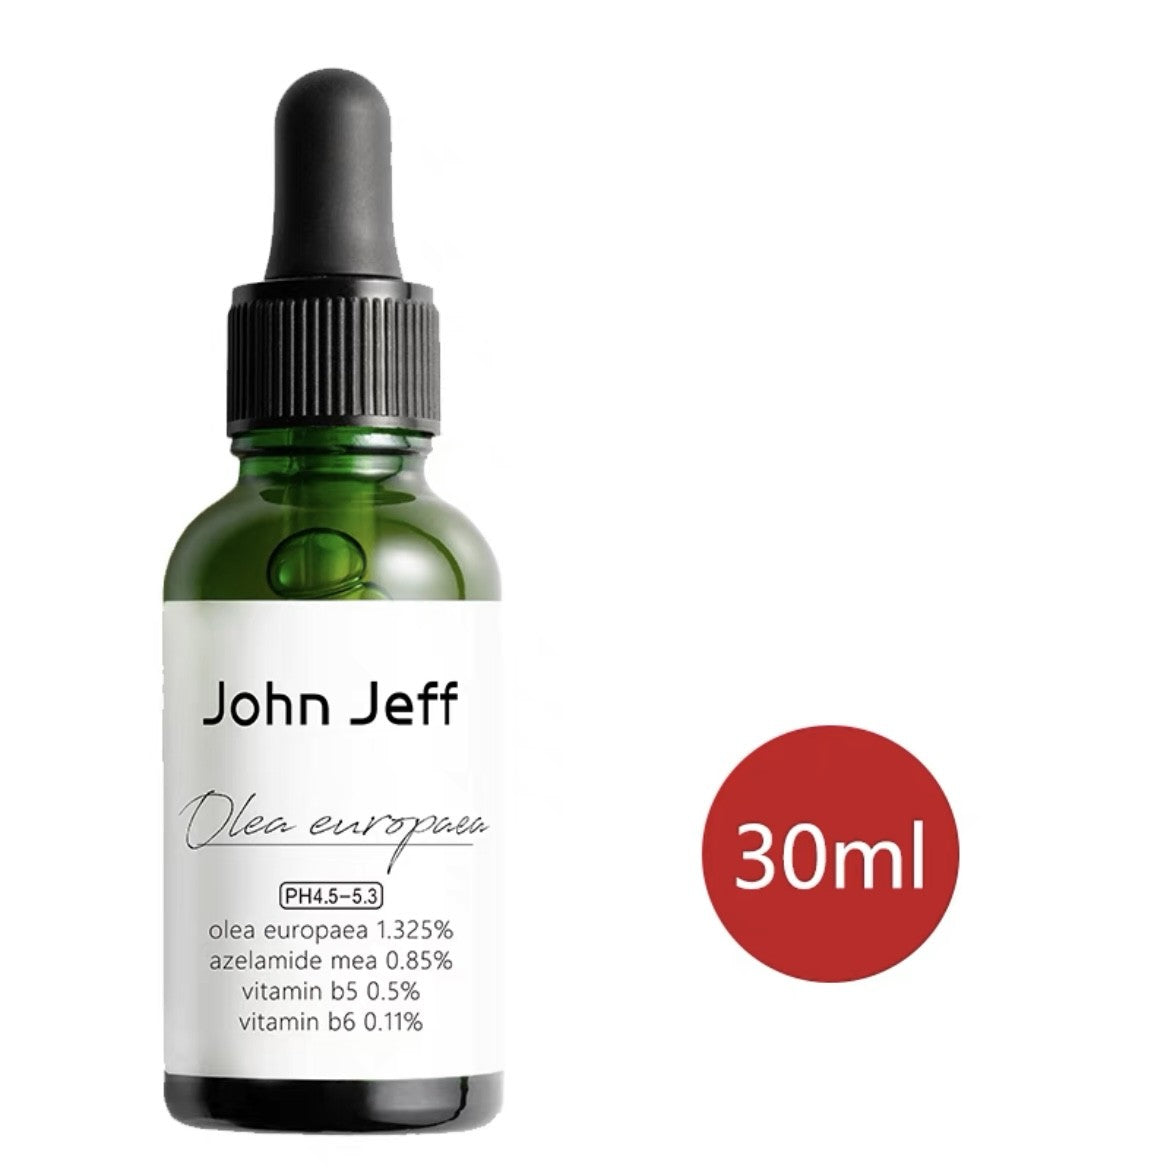 John Jeff 1.325% Olive Europaea John Jeff 油橄榄舒缓维稳去痘印精华 15/30 ML